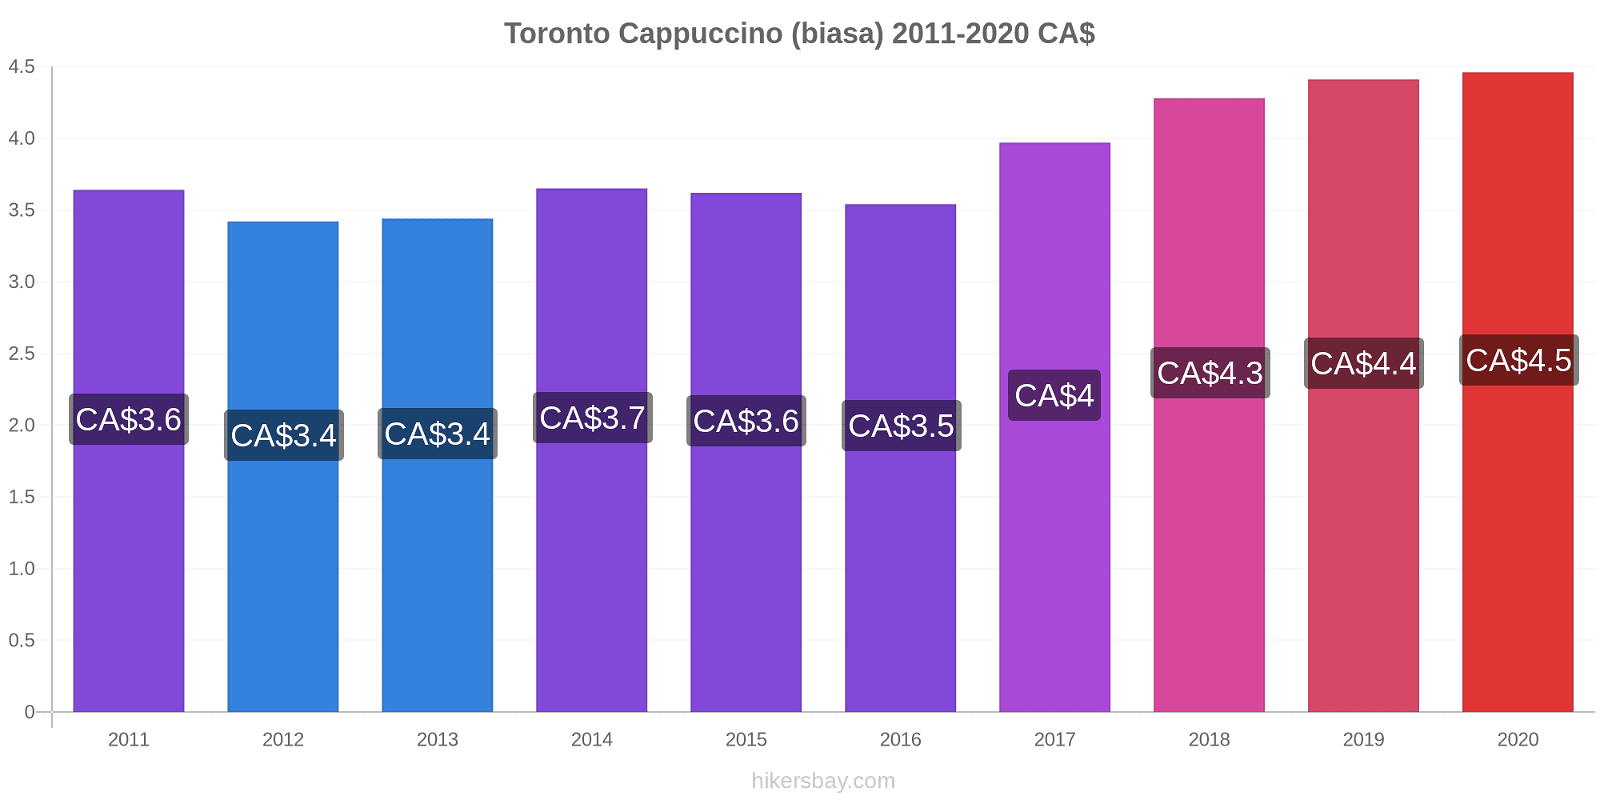 Toronto perubahan harga Cappuccino (biasa) hikersbay.com